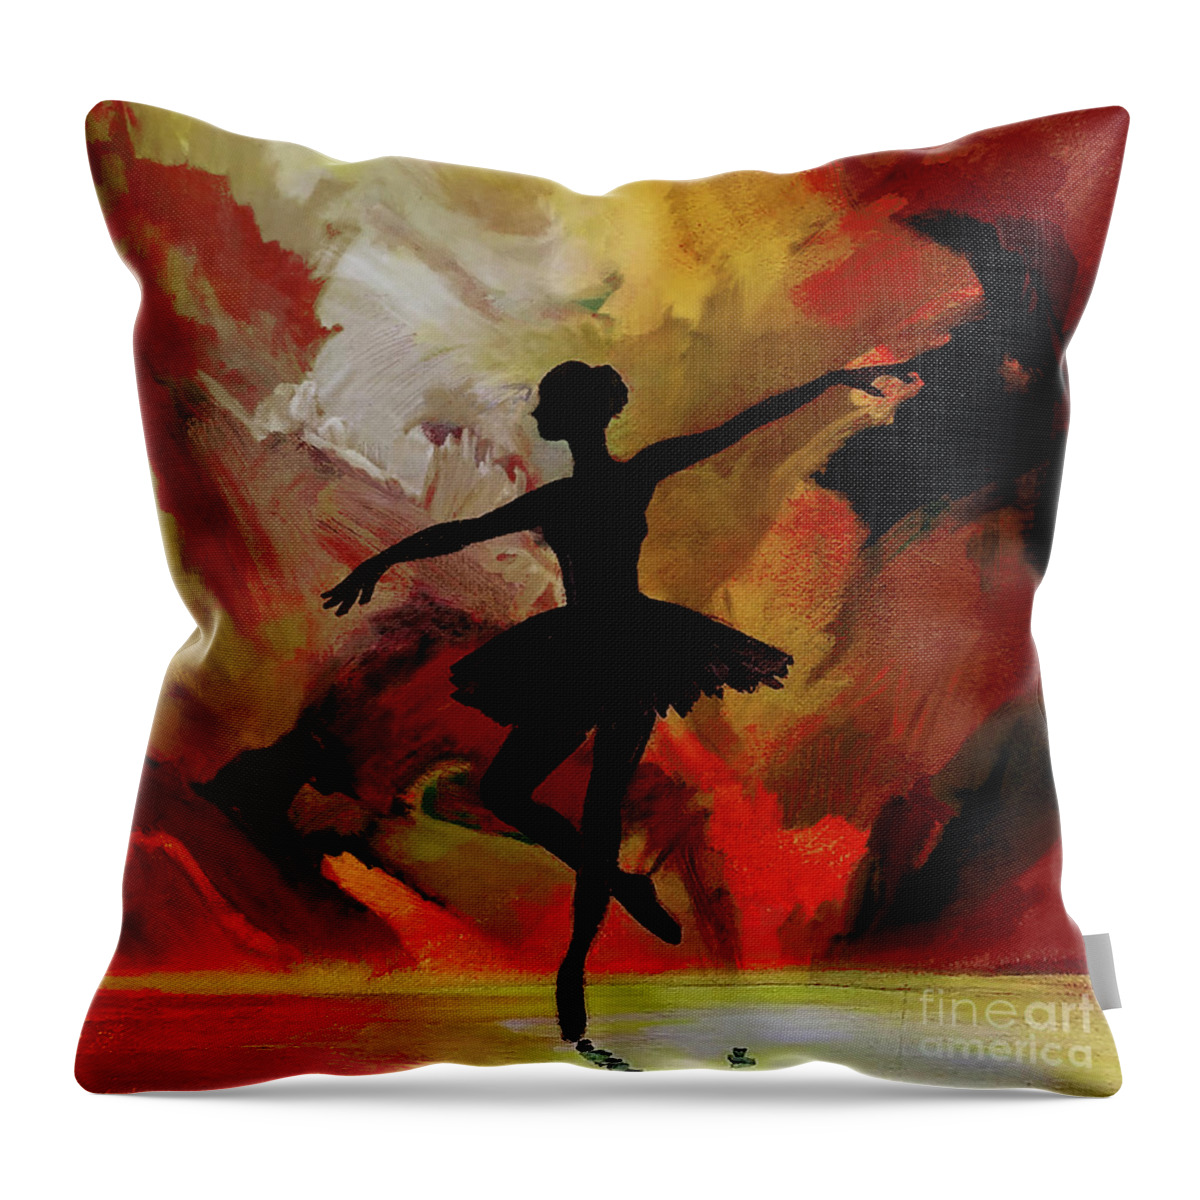 Arabianbelly Dance Throw Pillow featuring the painting Ballet Art Dance 02 by Gull G